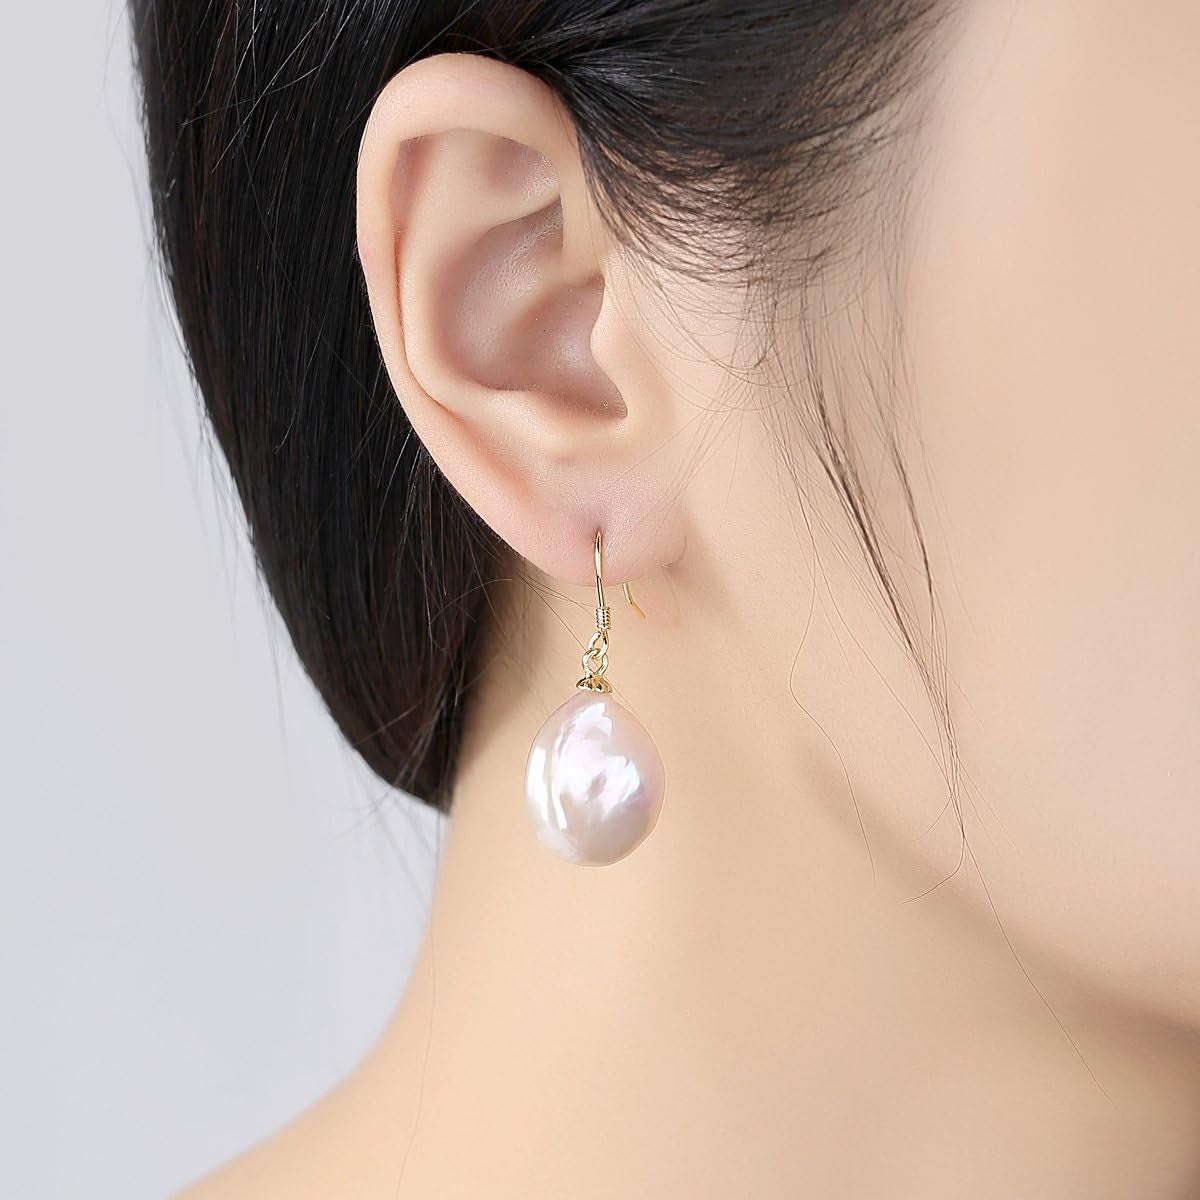 Pearl Earrings - Pearl Drop Earrings Sterling Silver 9-10Mm Real Freshwater Cultured Pearl Dangle Earrings